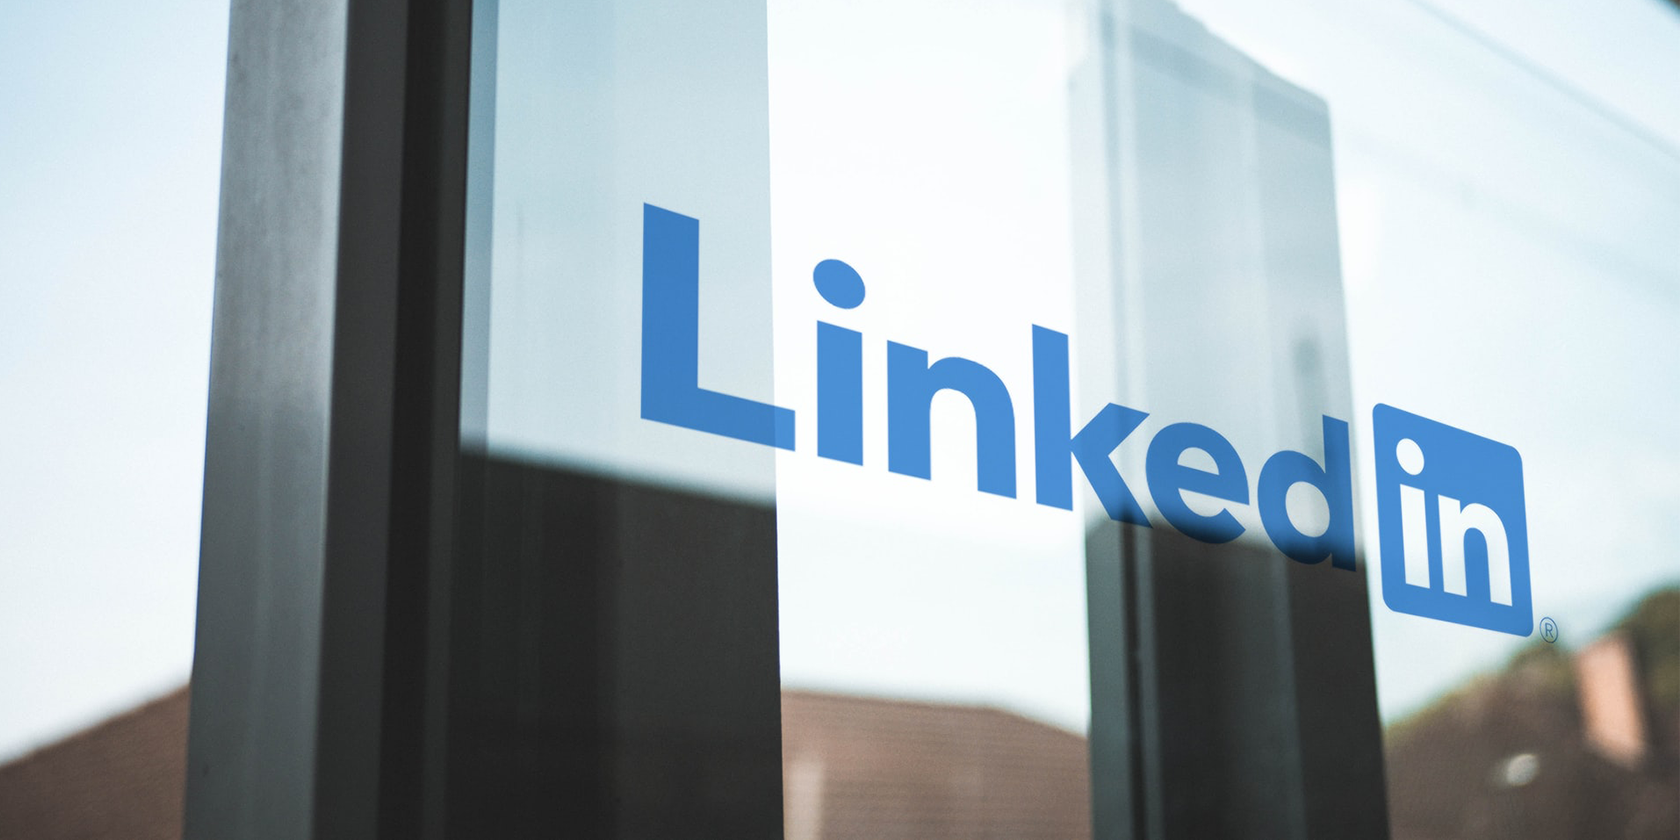 The LinkedIn logo printed on a window